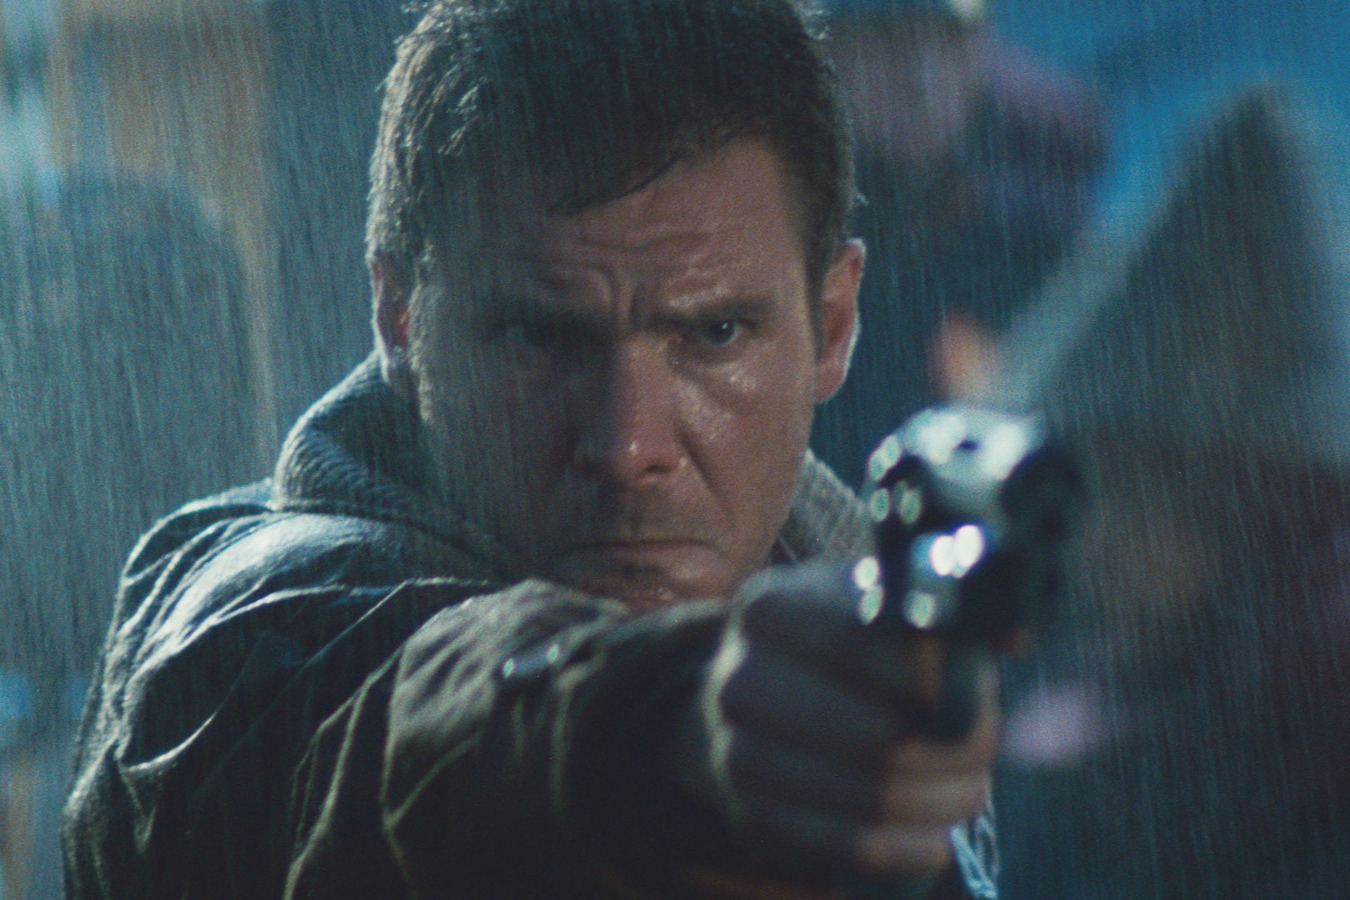 A man points a gun in Blade Runner.